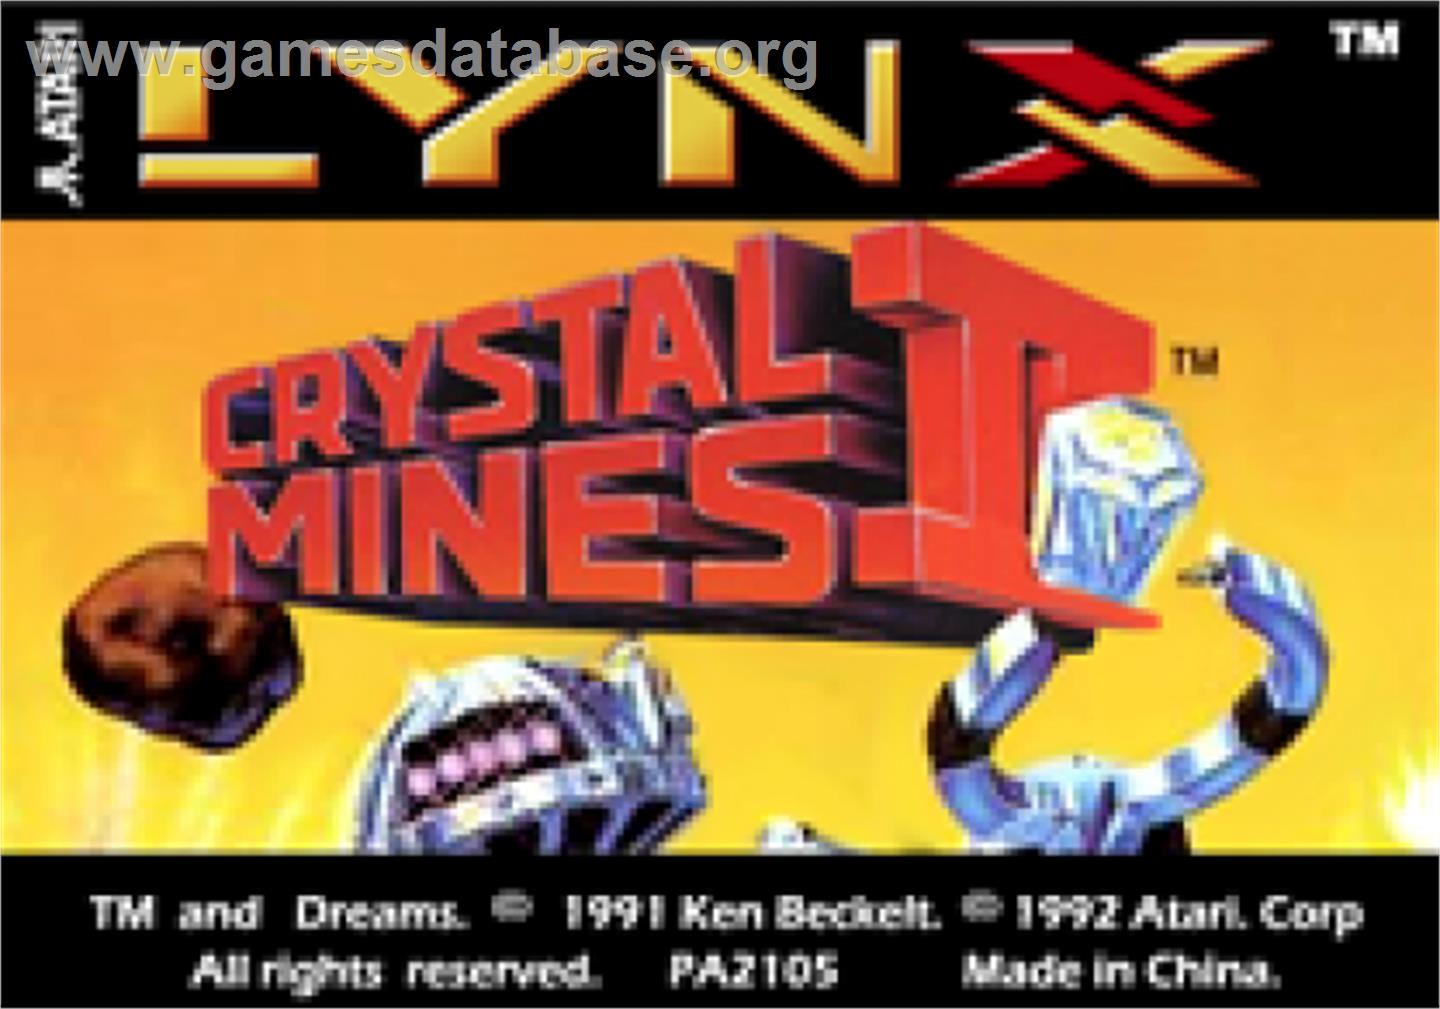 Crystal Mines II - Atari Lynx - Artwork - Cartridge Top